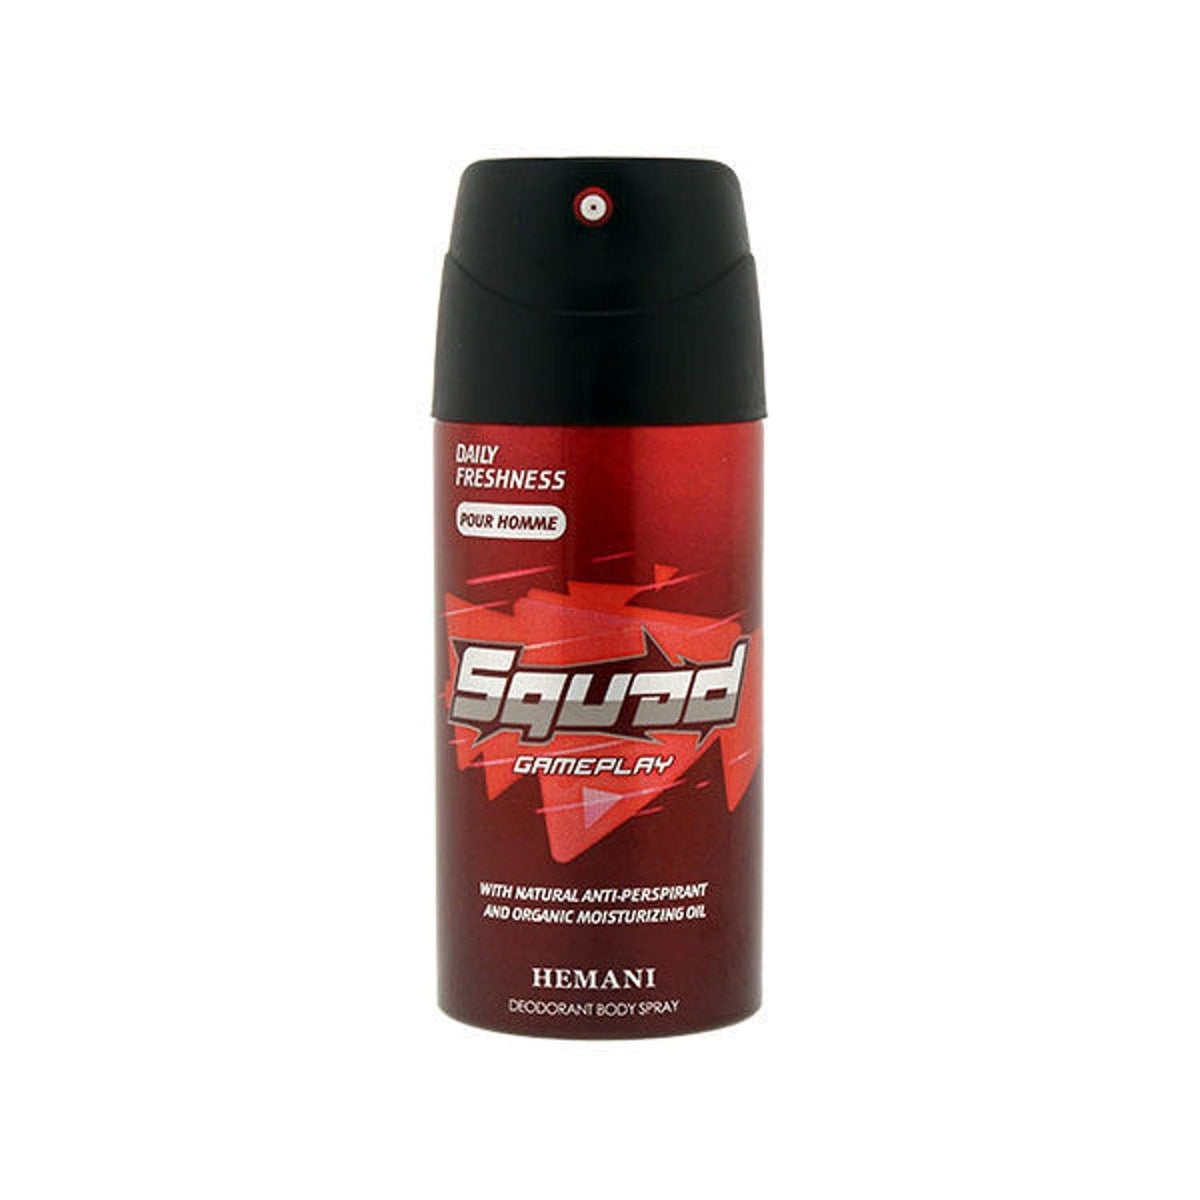 Hemani Squad Deodorant Spray Gameplay For Men - Premium  from Hemani - Just Rs 350.00! Shop now at Cozmetica